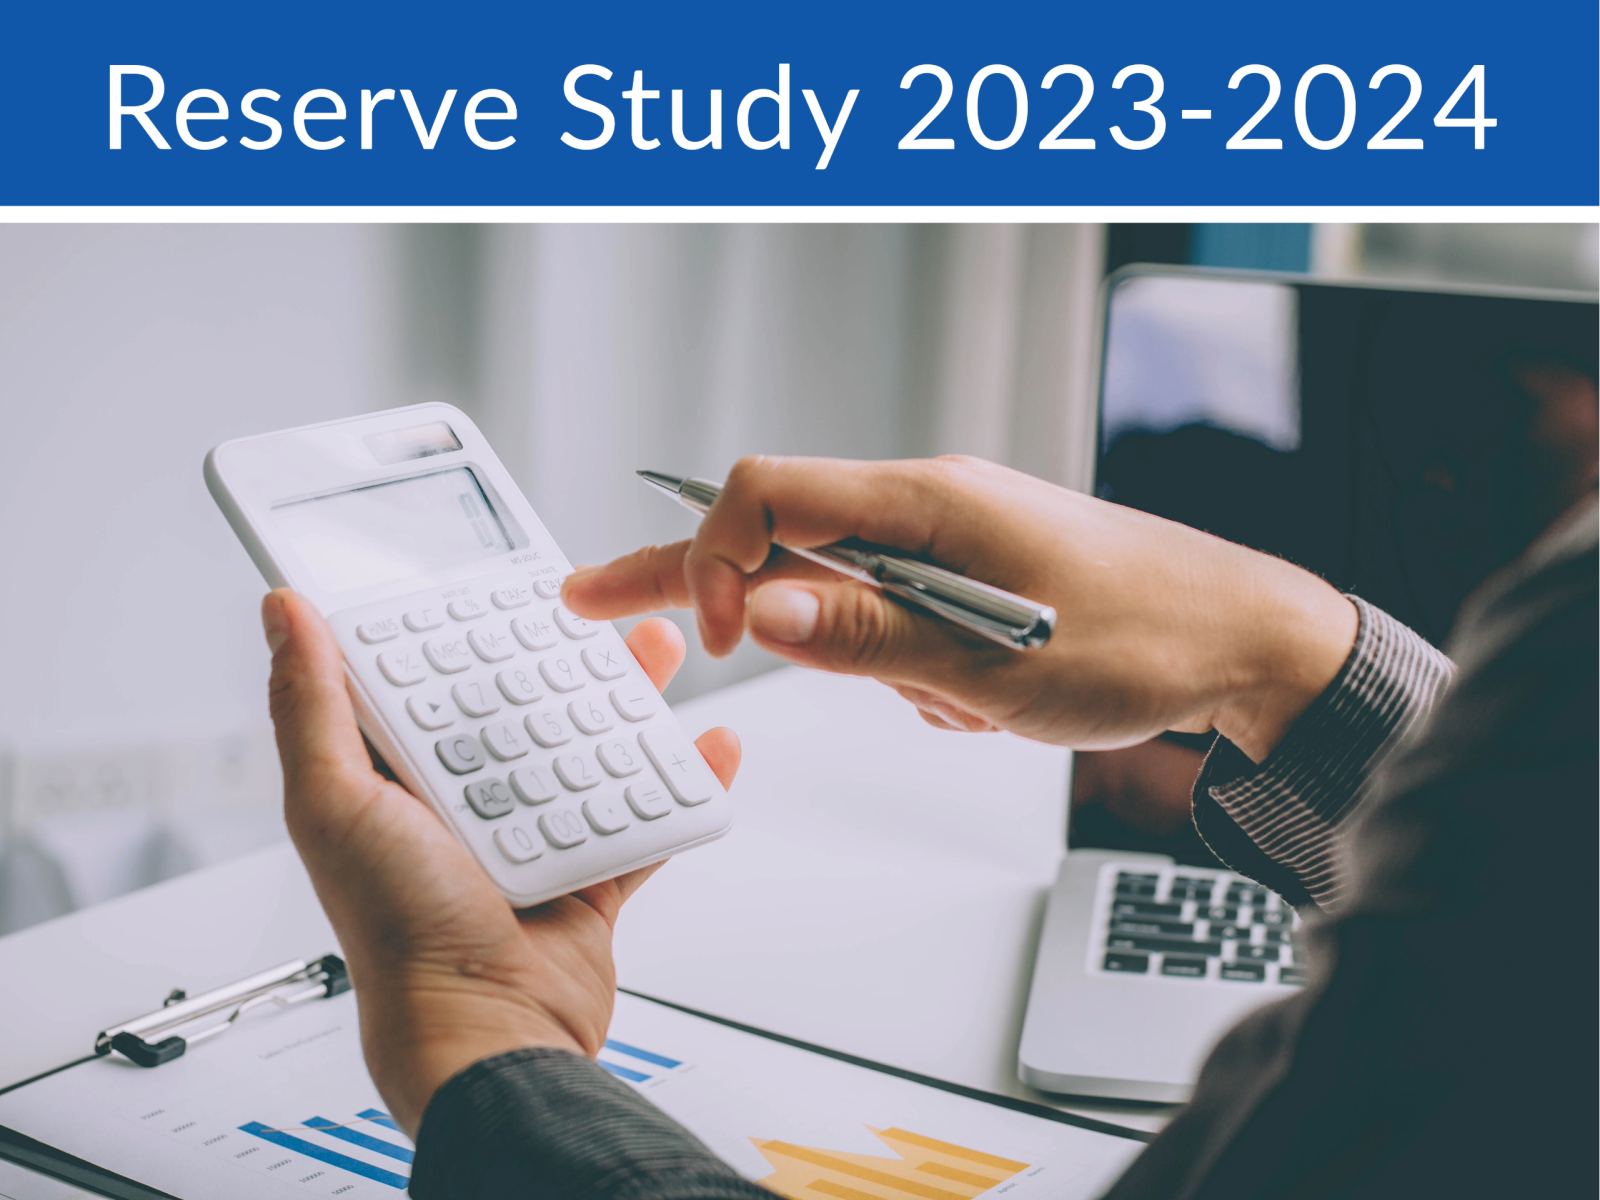 Reserve Study 2023-2024